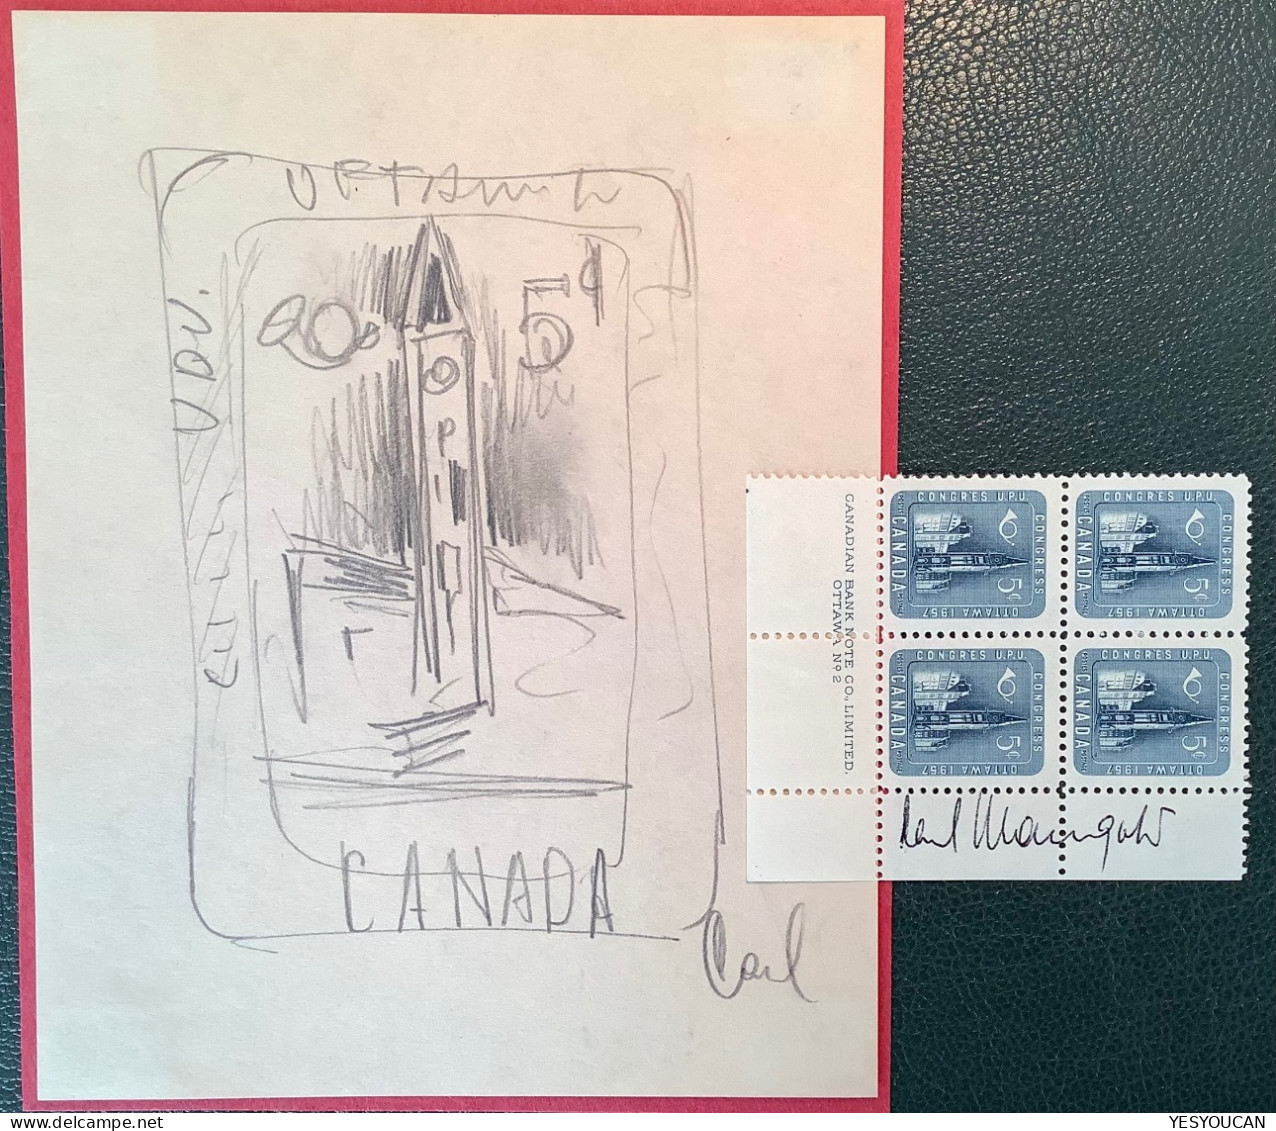 Canada Hand-drawn Essay 5c UPU CONGRESS OTTAWA 1957 Signed By Artist + Stamp, Ex Severin UPU Coll. Corinphila2012 (Proof - Nuovi